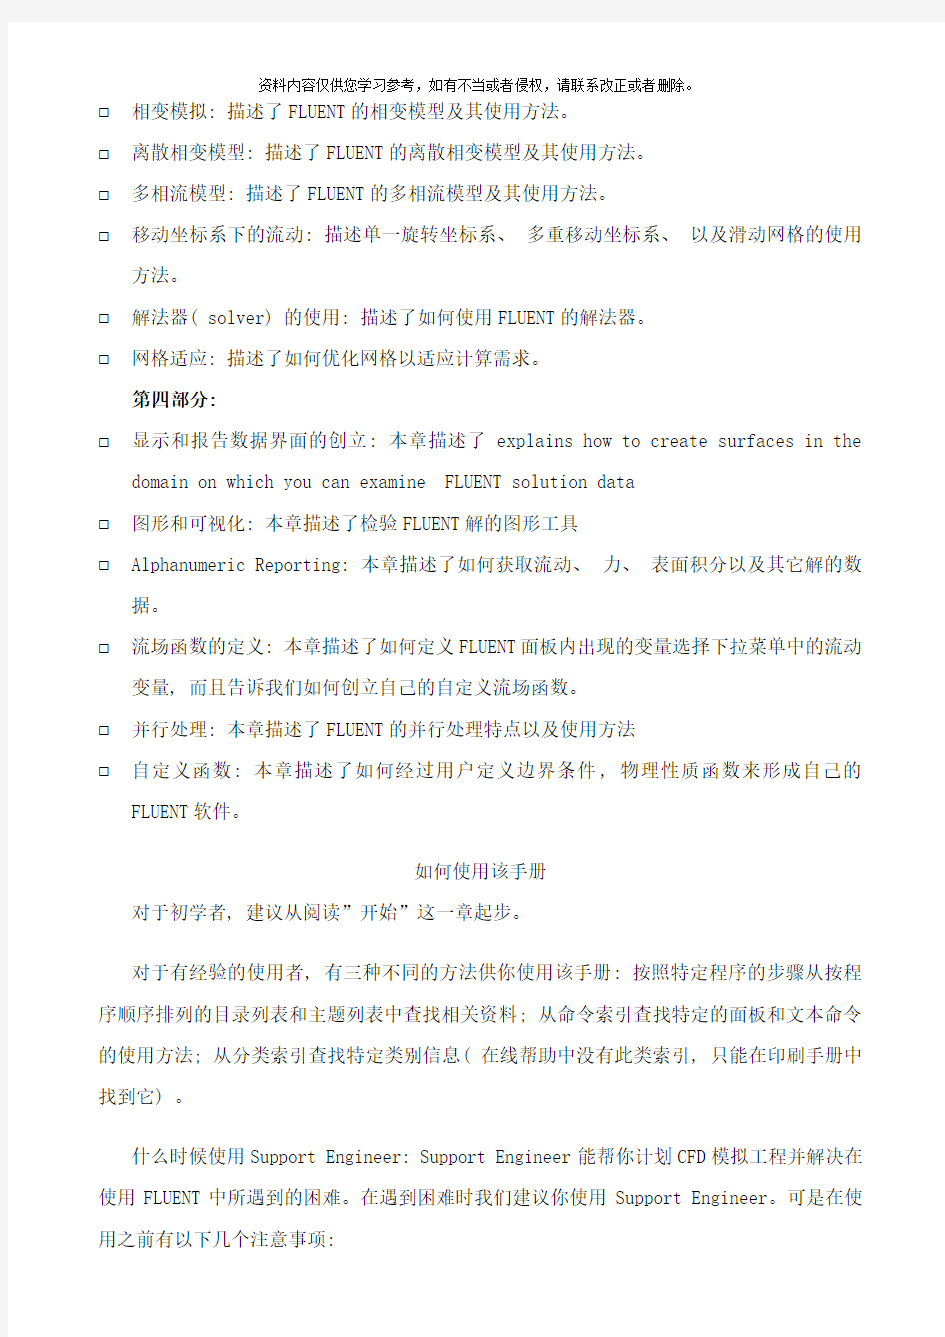 FLUENT中文手册简化版样本